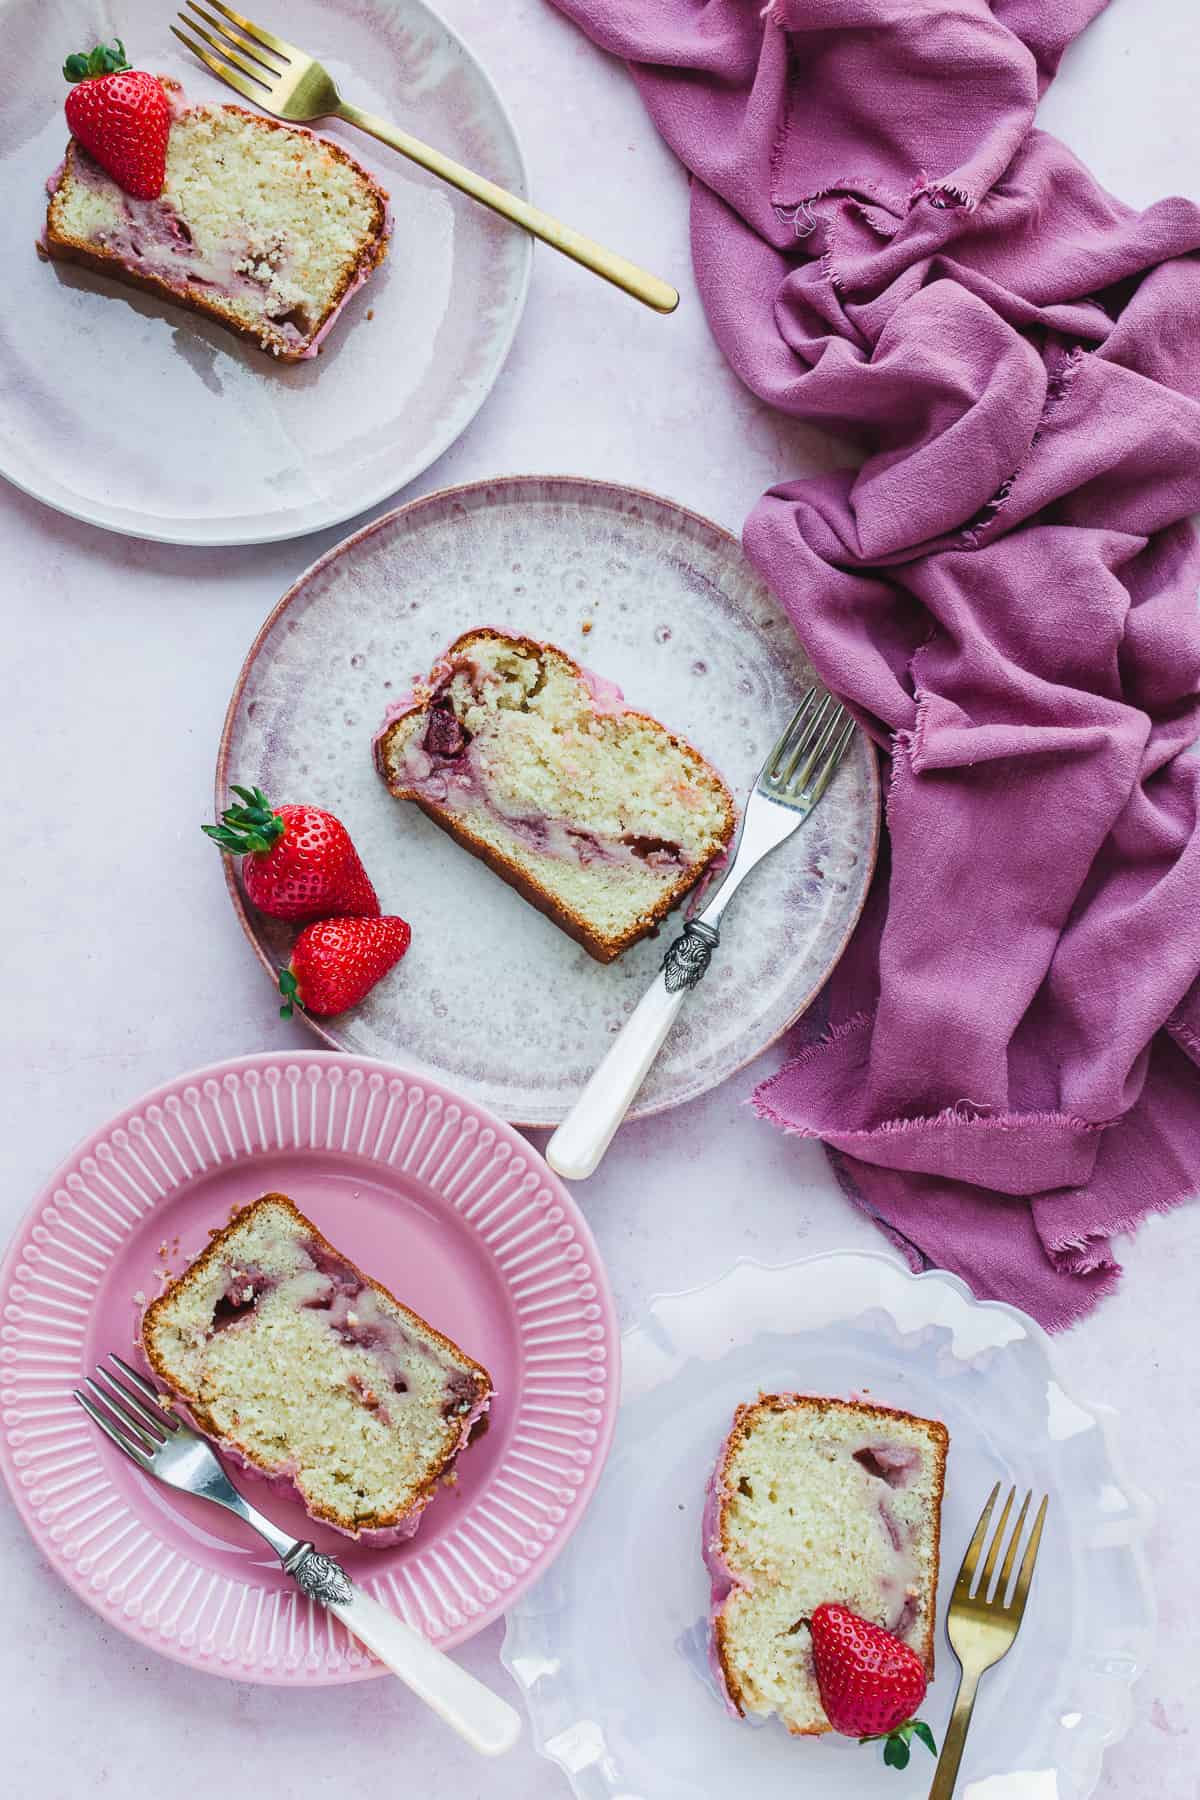 Slices of freshly baked Strawberry Pound cake on pink plates. 